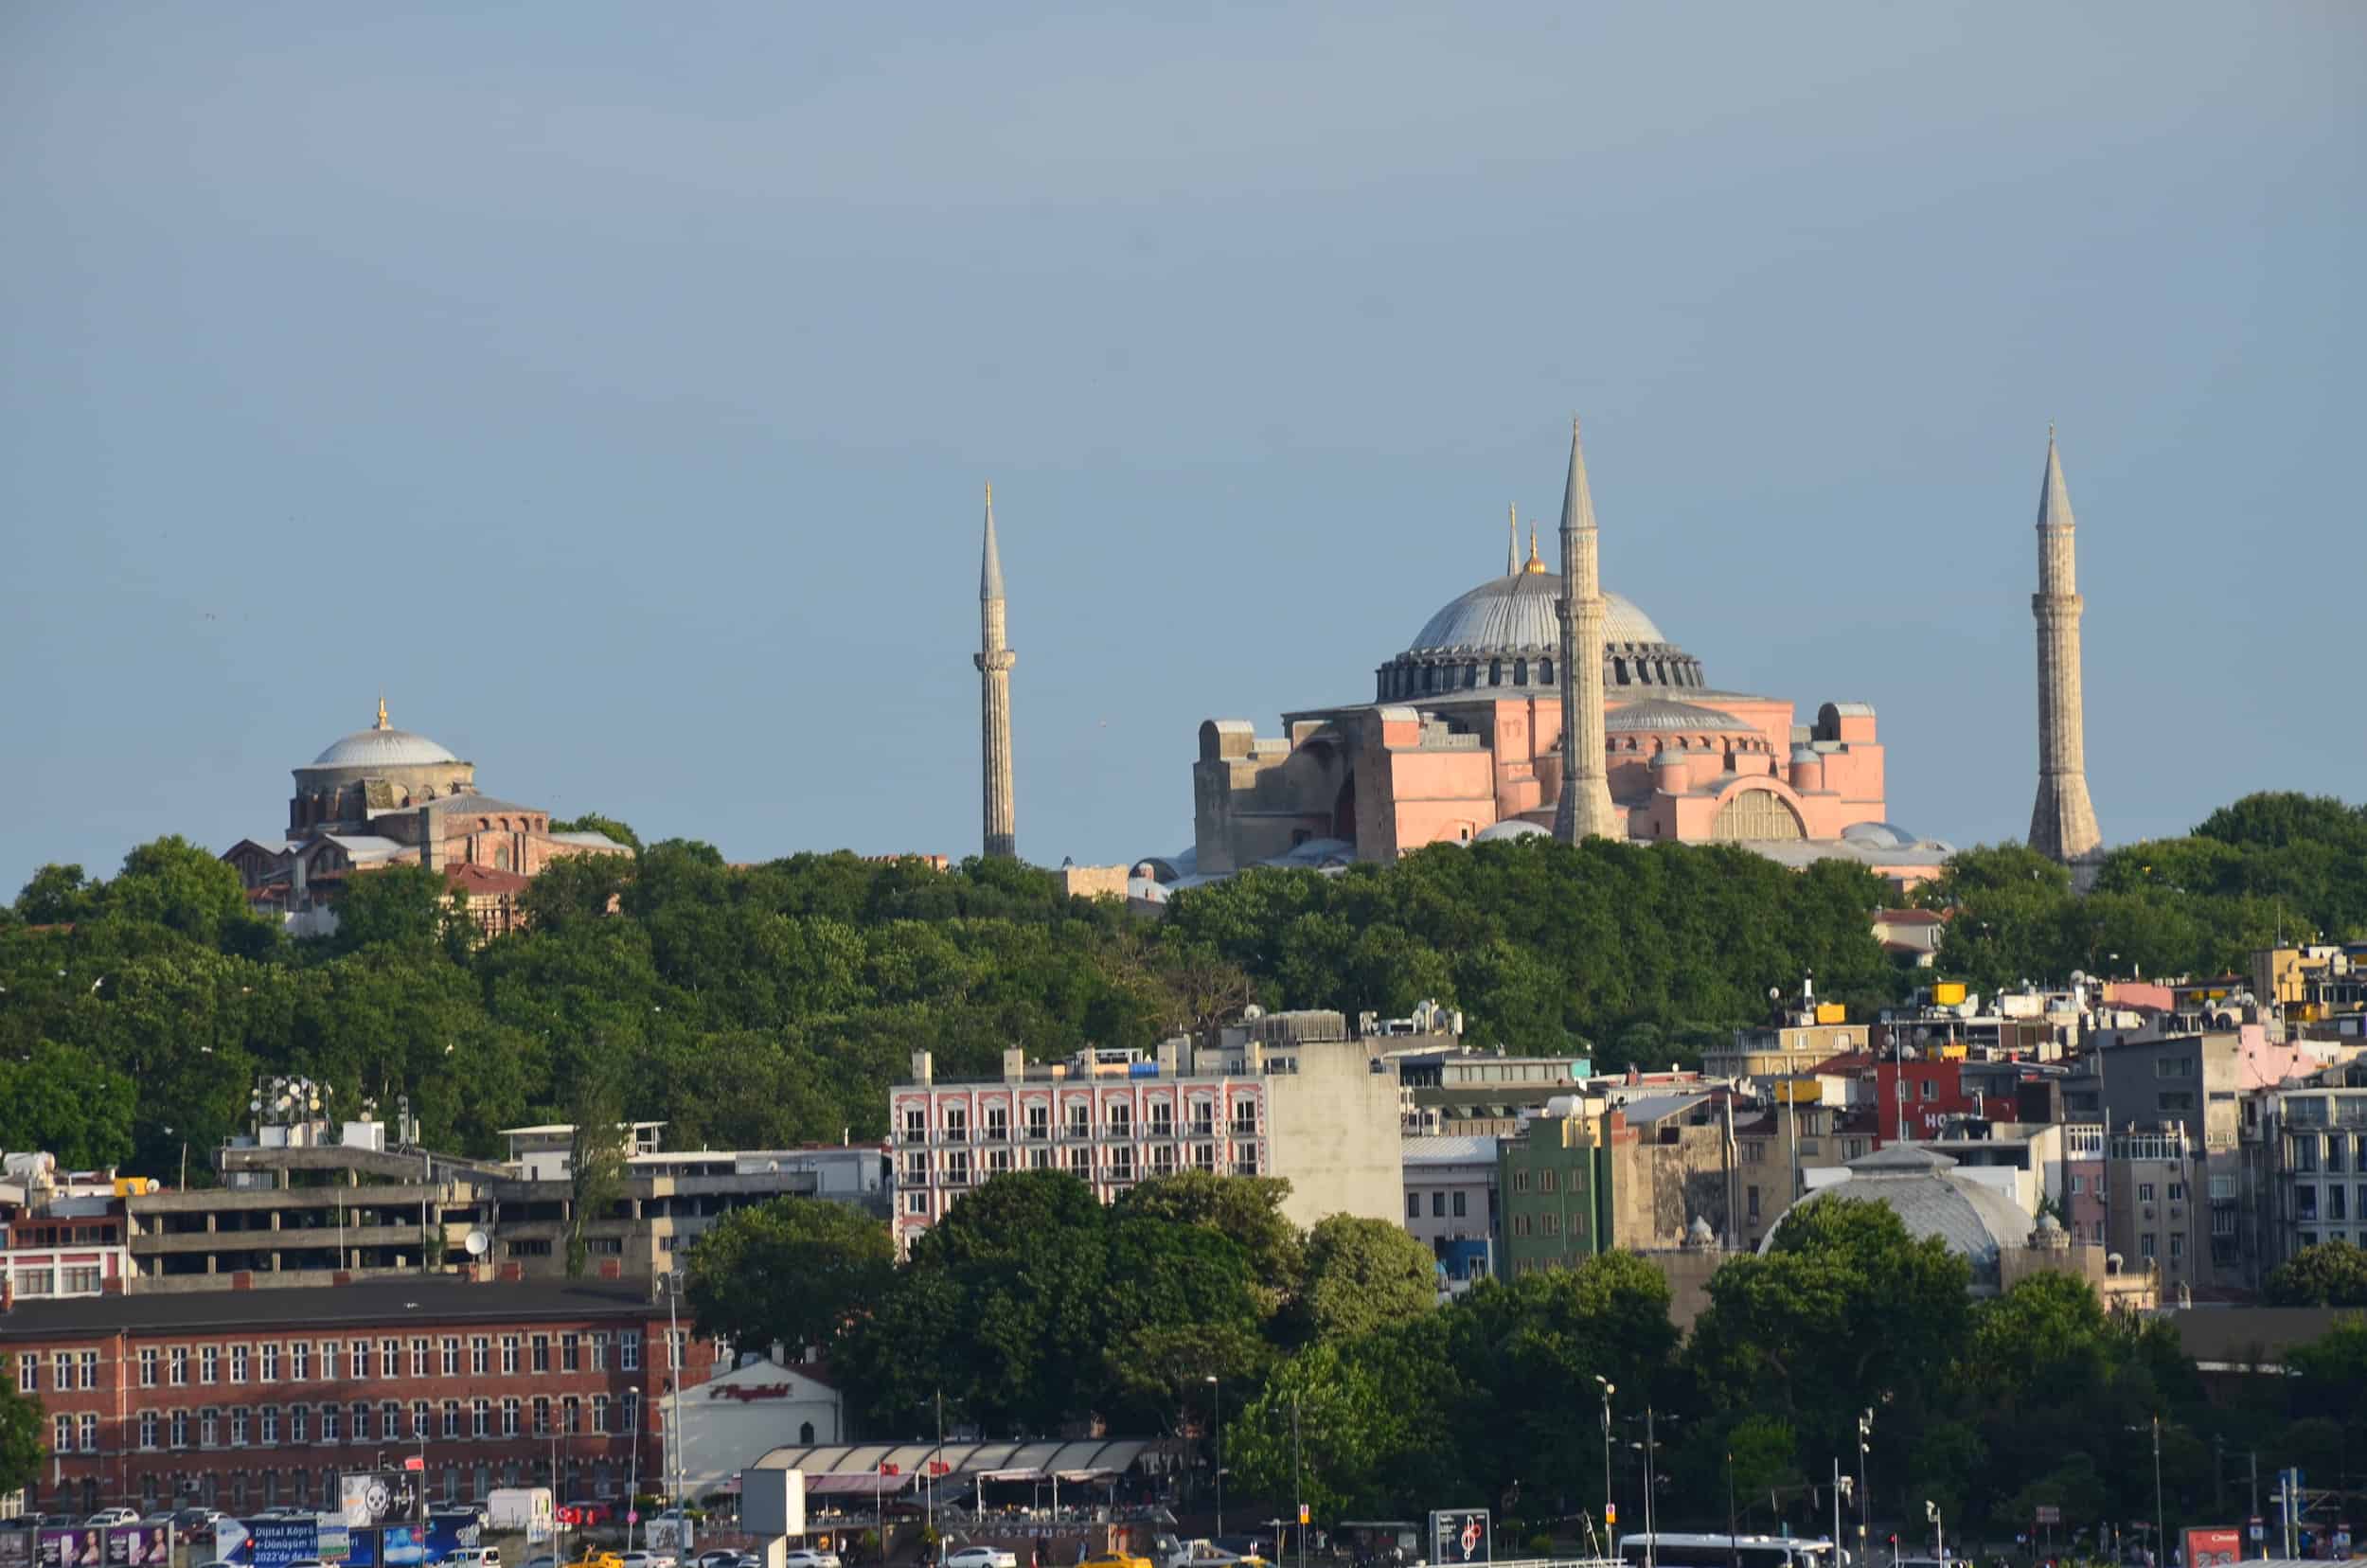 Hagia Sophia from across the Golden Horn in Istanbul, Turkey